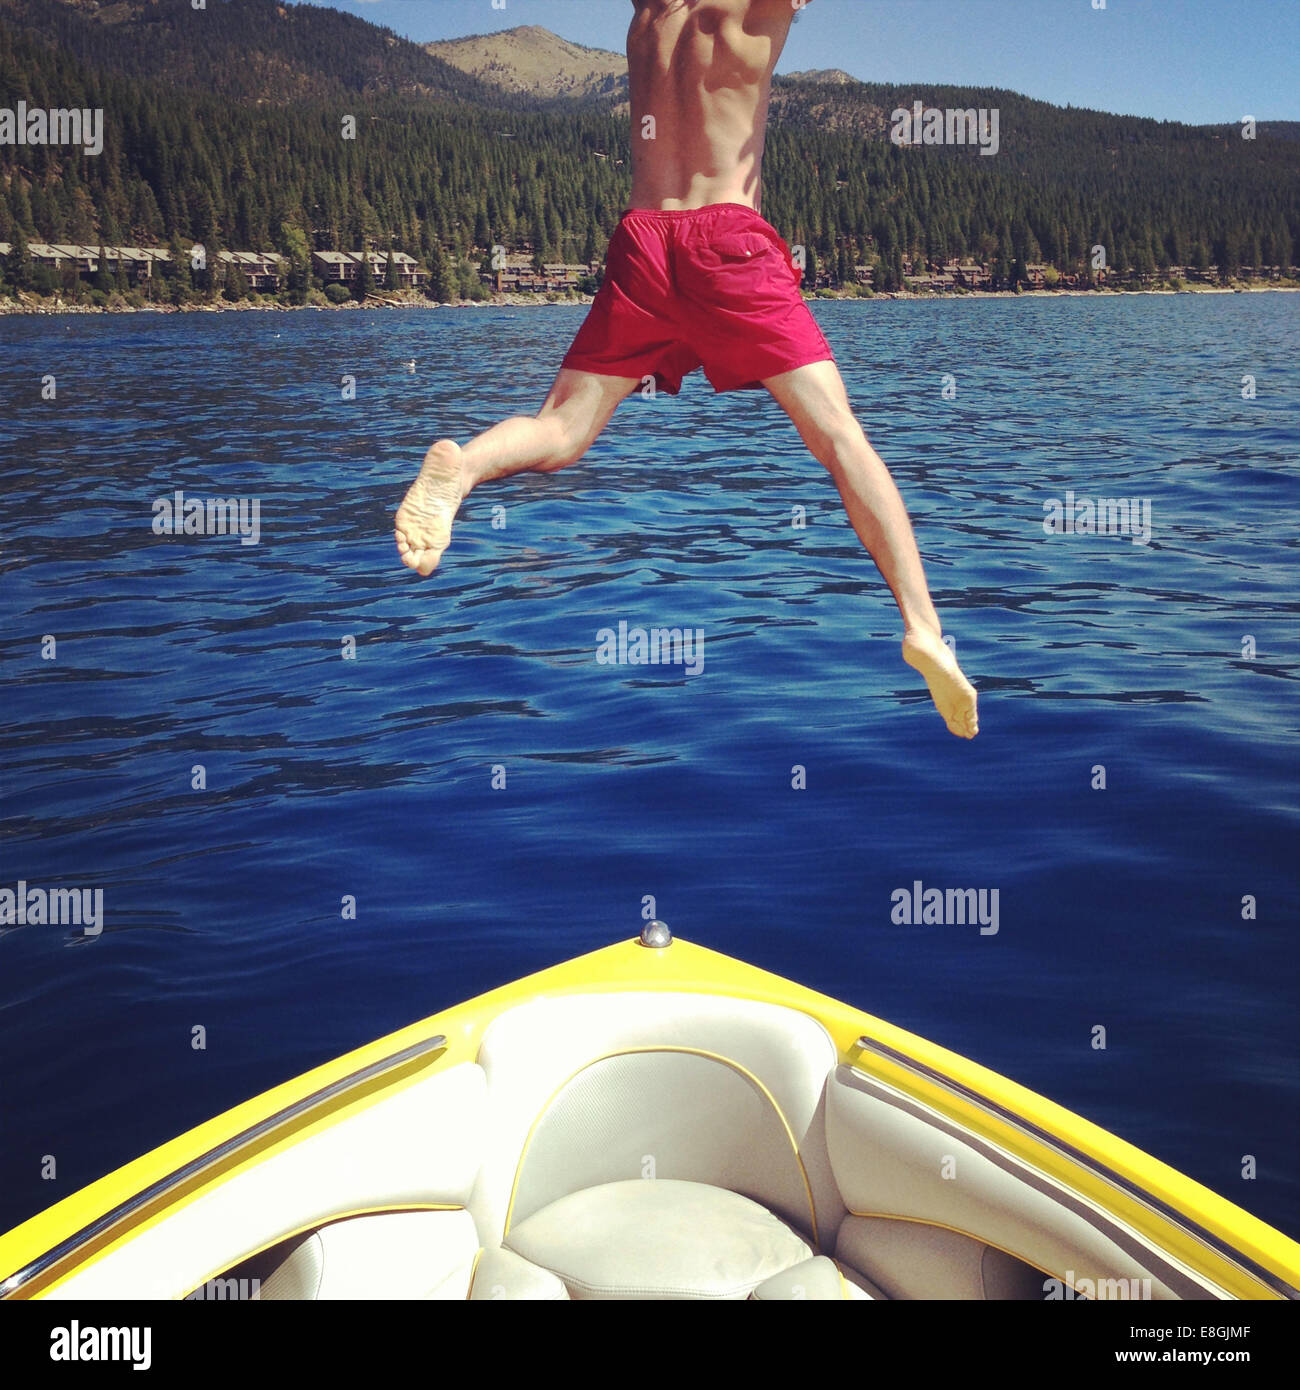 Man jumping off boat into a lake, Lake Tahoe, California, United States Stock Photo